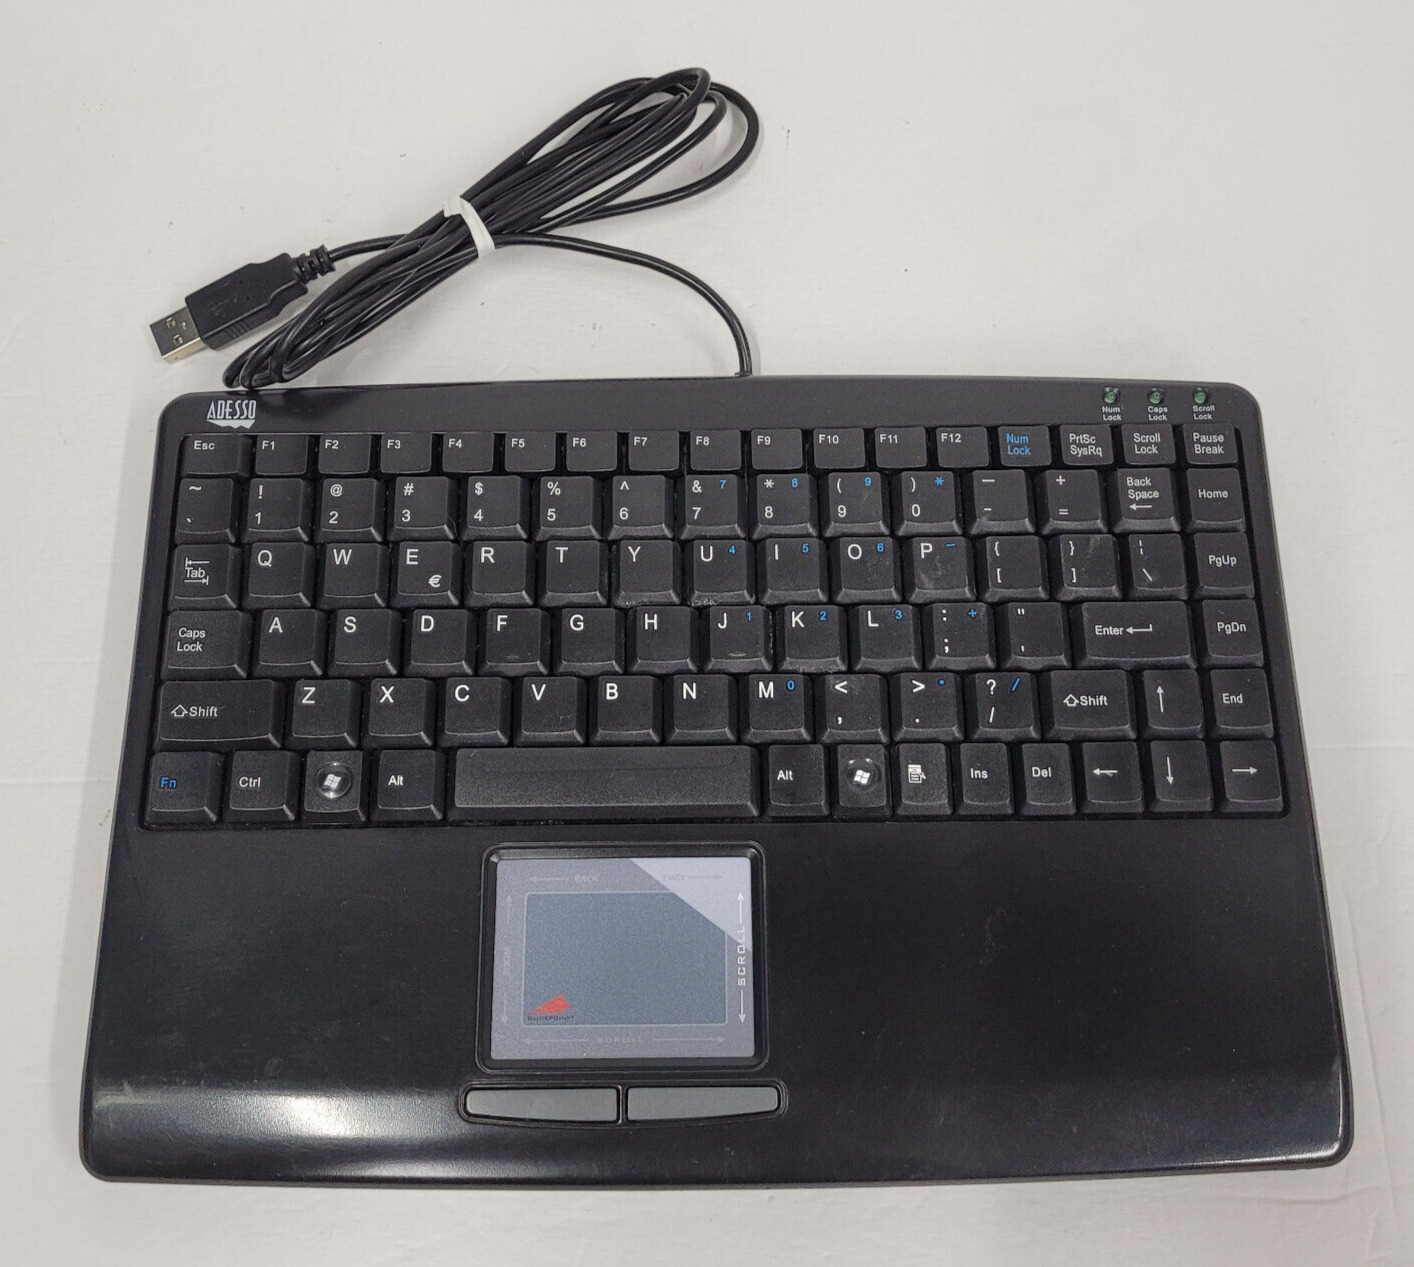 Adesso Slimtouch 410 USB wired keyboard trackpad AKB-410UB TESTED